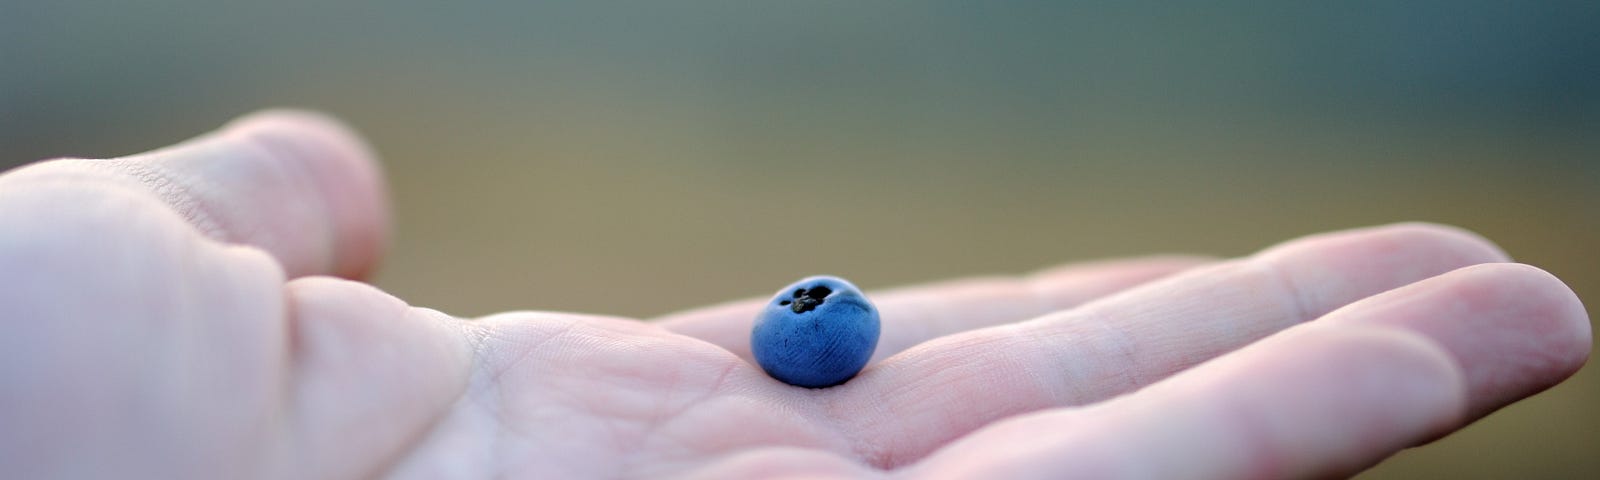 An open hand holding a blueberry.